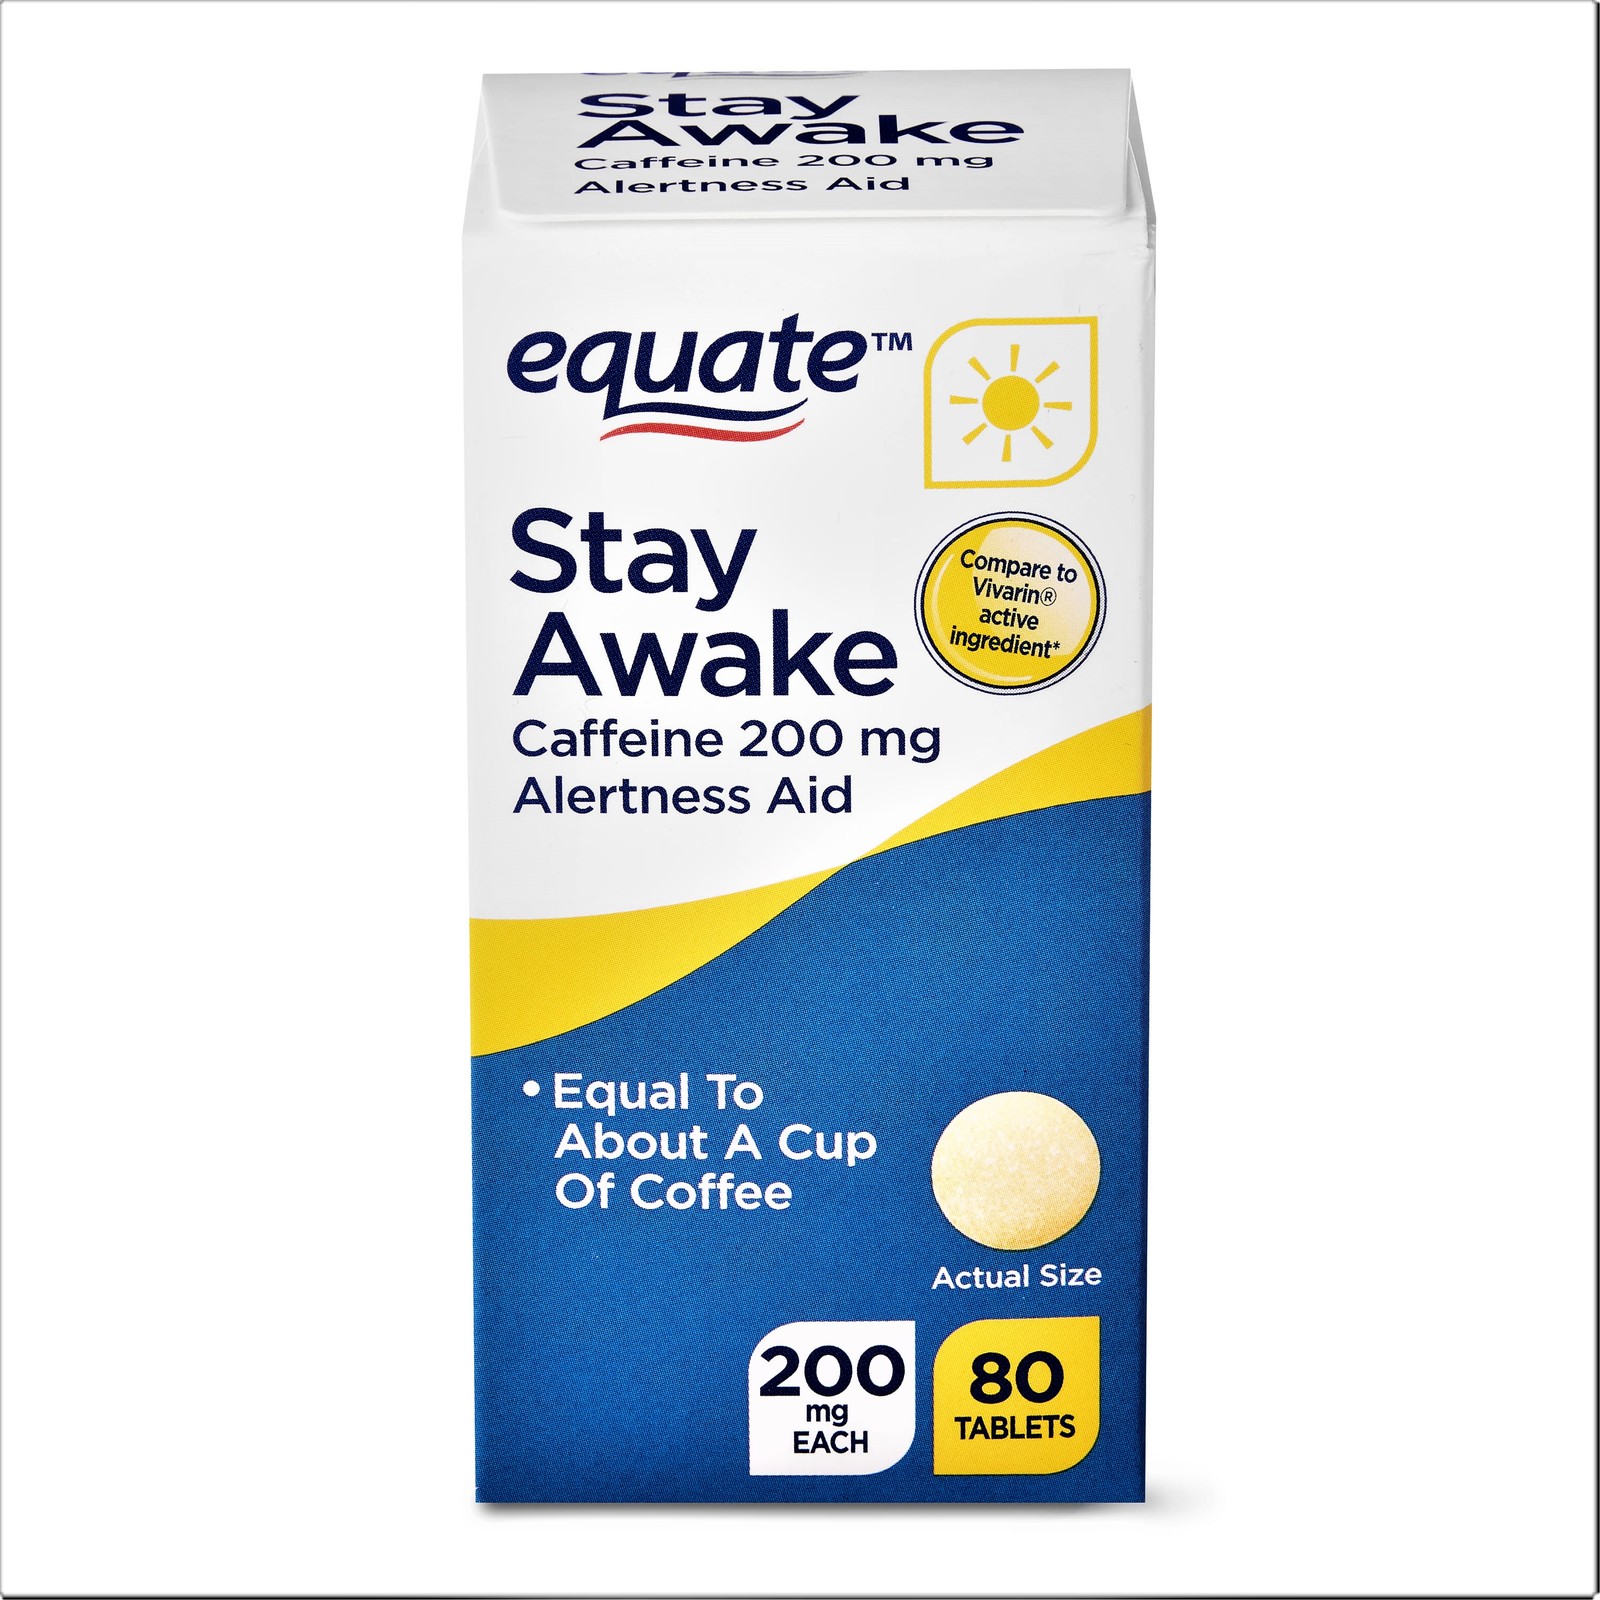 Equate Stay Awake Caffeine Alertness Aid Tablets, 200 mg 80 Tablets  - $17.59